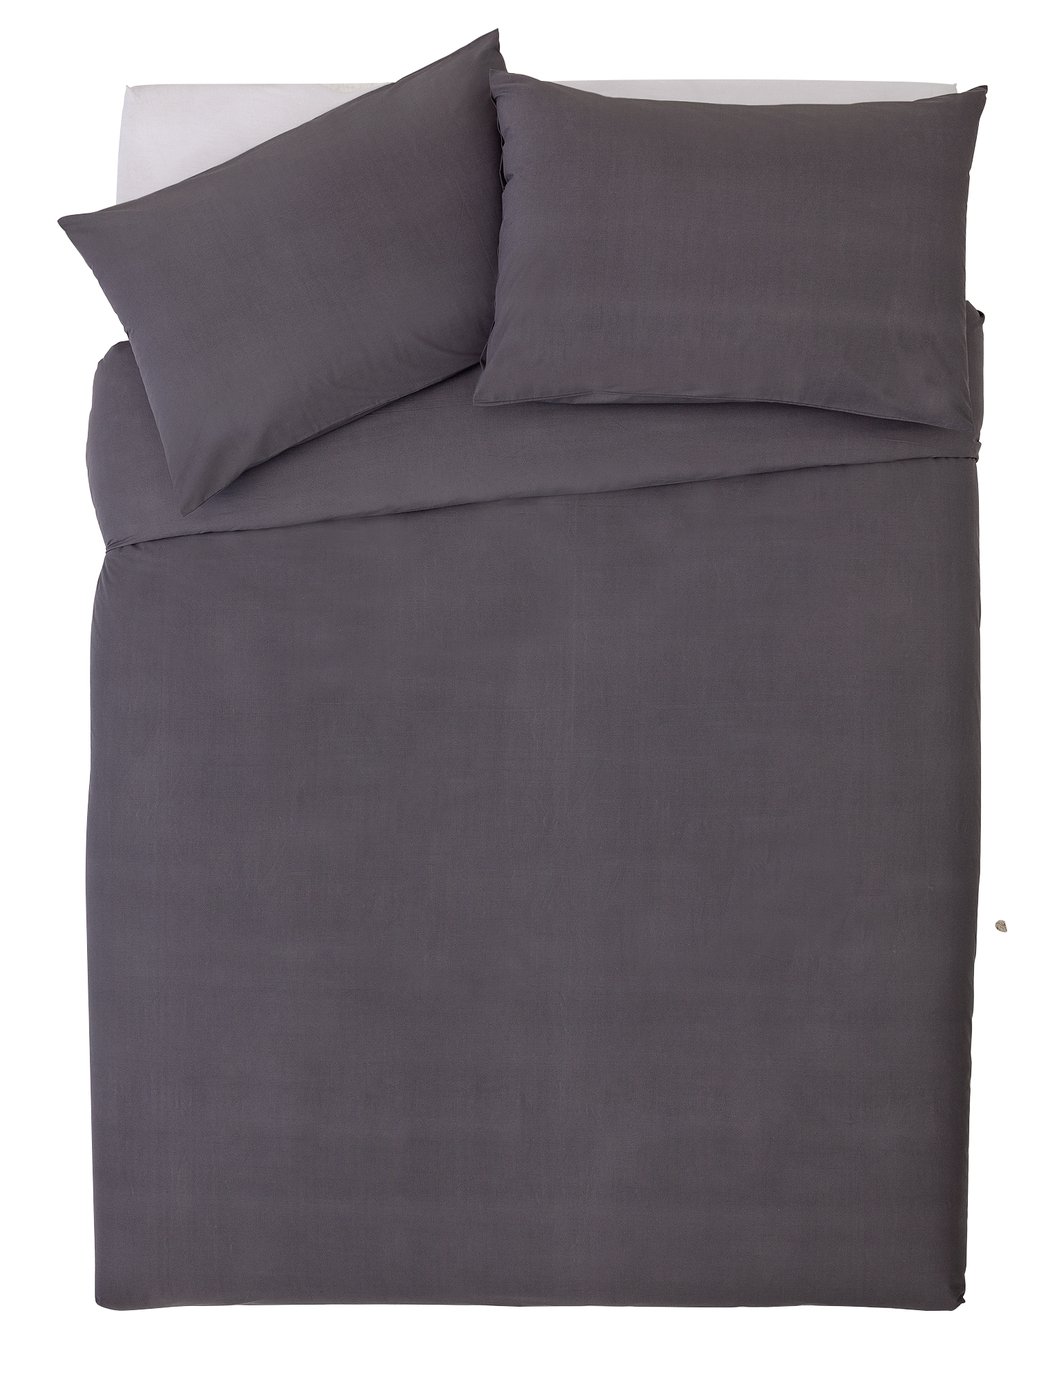 Argos Home Charcoal Cotton Rich Bedding Set review